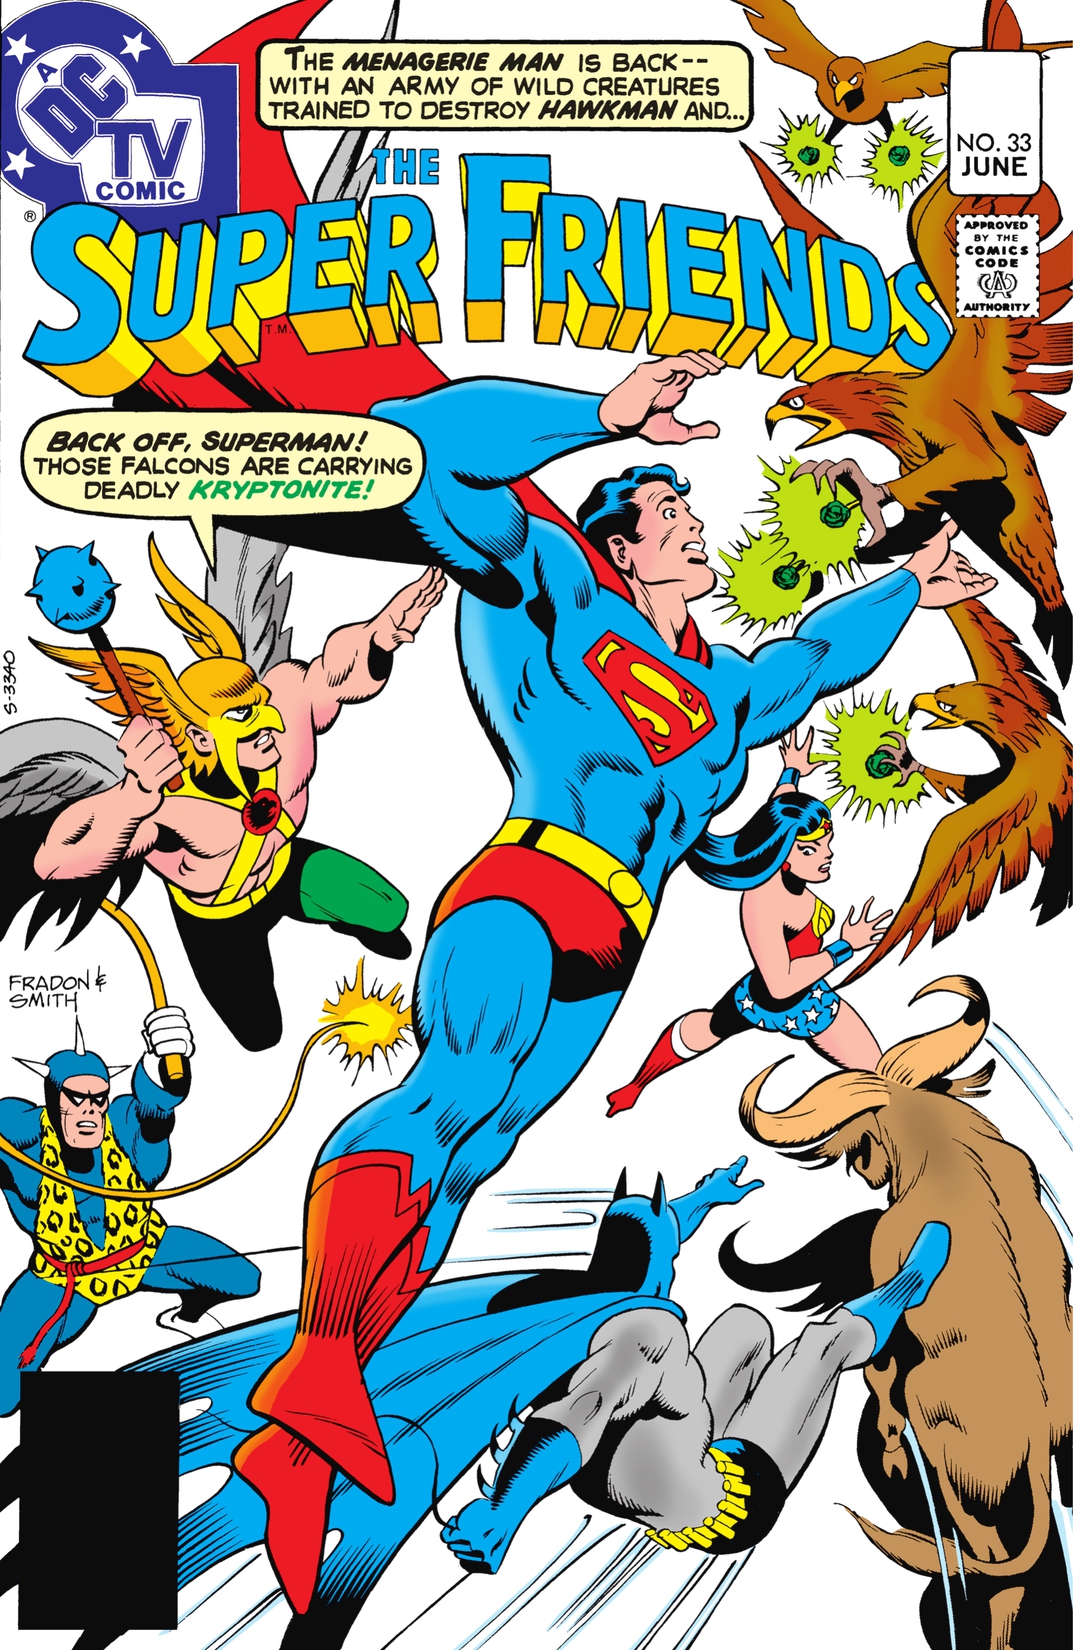 Super Friends (1976-1981) #33 preview images